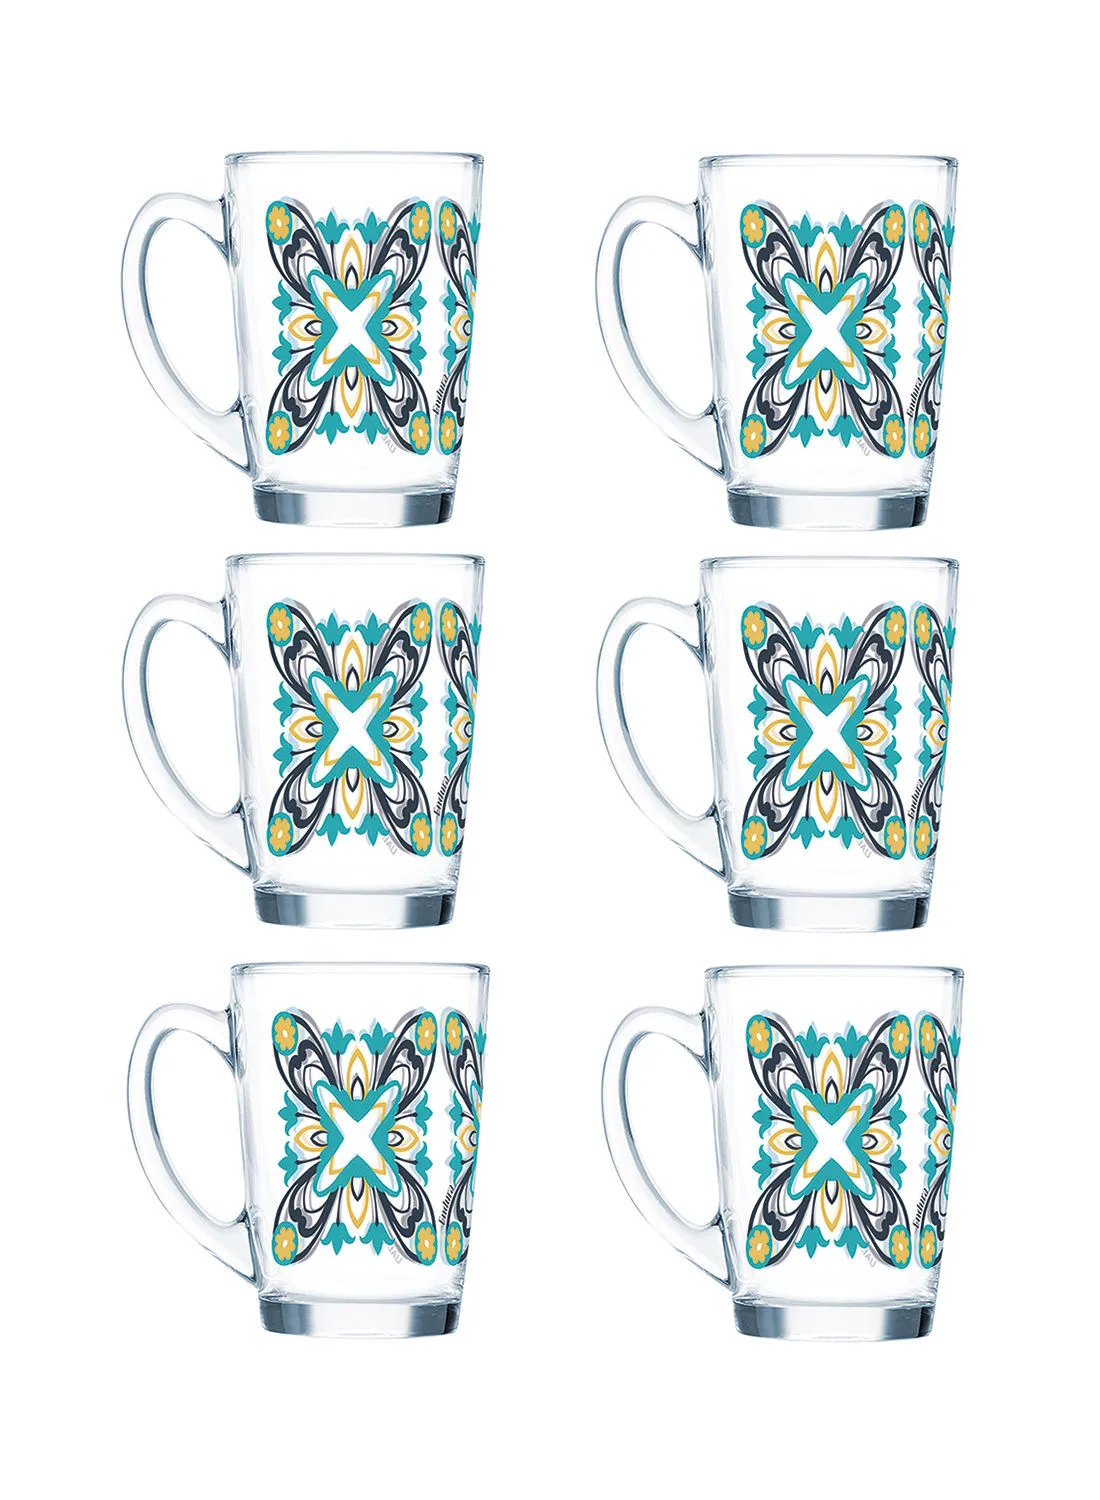 Endura 6 Piece Glass Mug Set - Made Of Tempered Glass - Coffee Mug Set For Cappuccino, Latte, Expresso, Tea - Heat Resistant Handles - Mug - A Cup Of Coffee - Coffee Mug - Each 90 ml - Jolyne